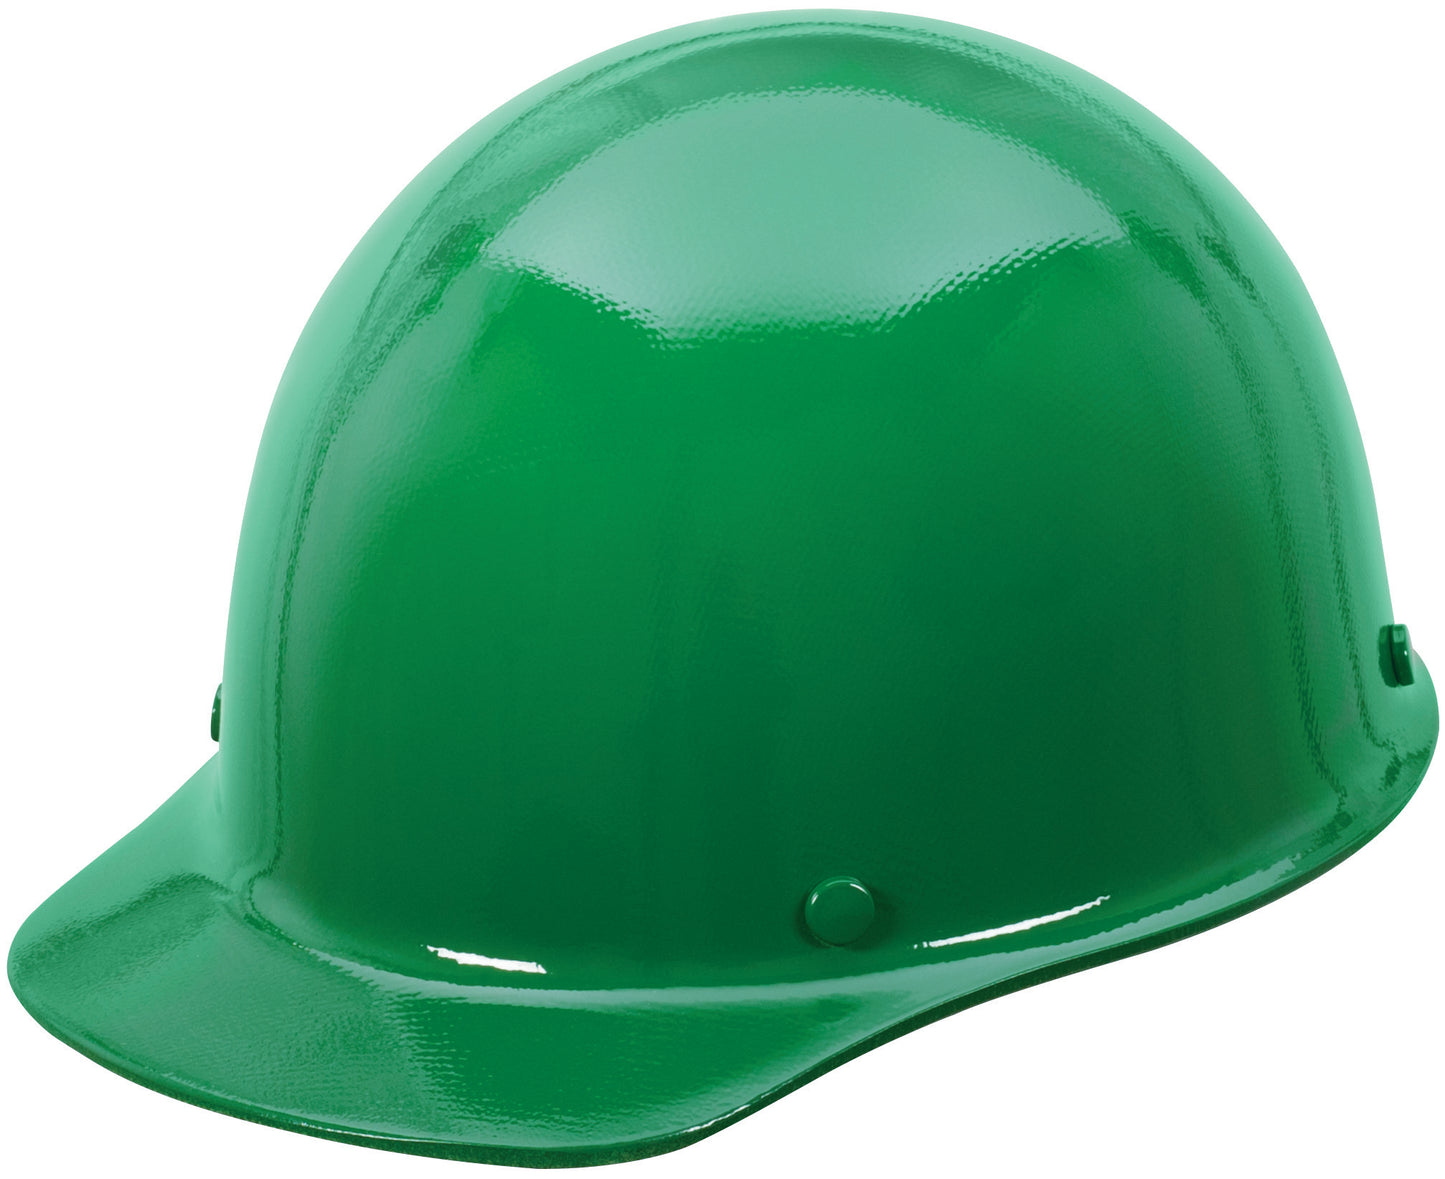 Skullgard Protective Cap Green - w/ Staz-On Suspension, Standard